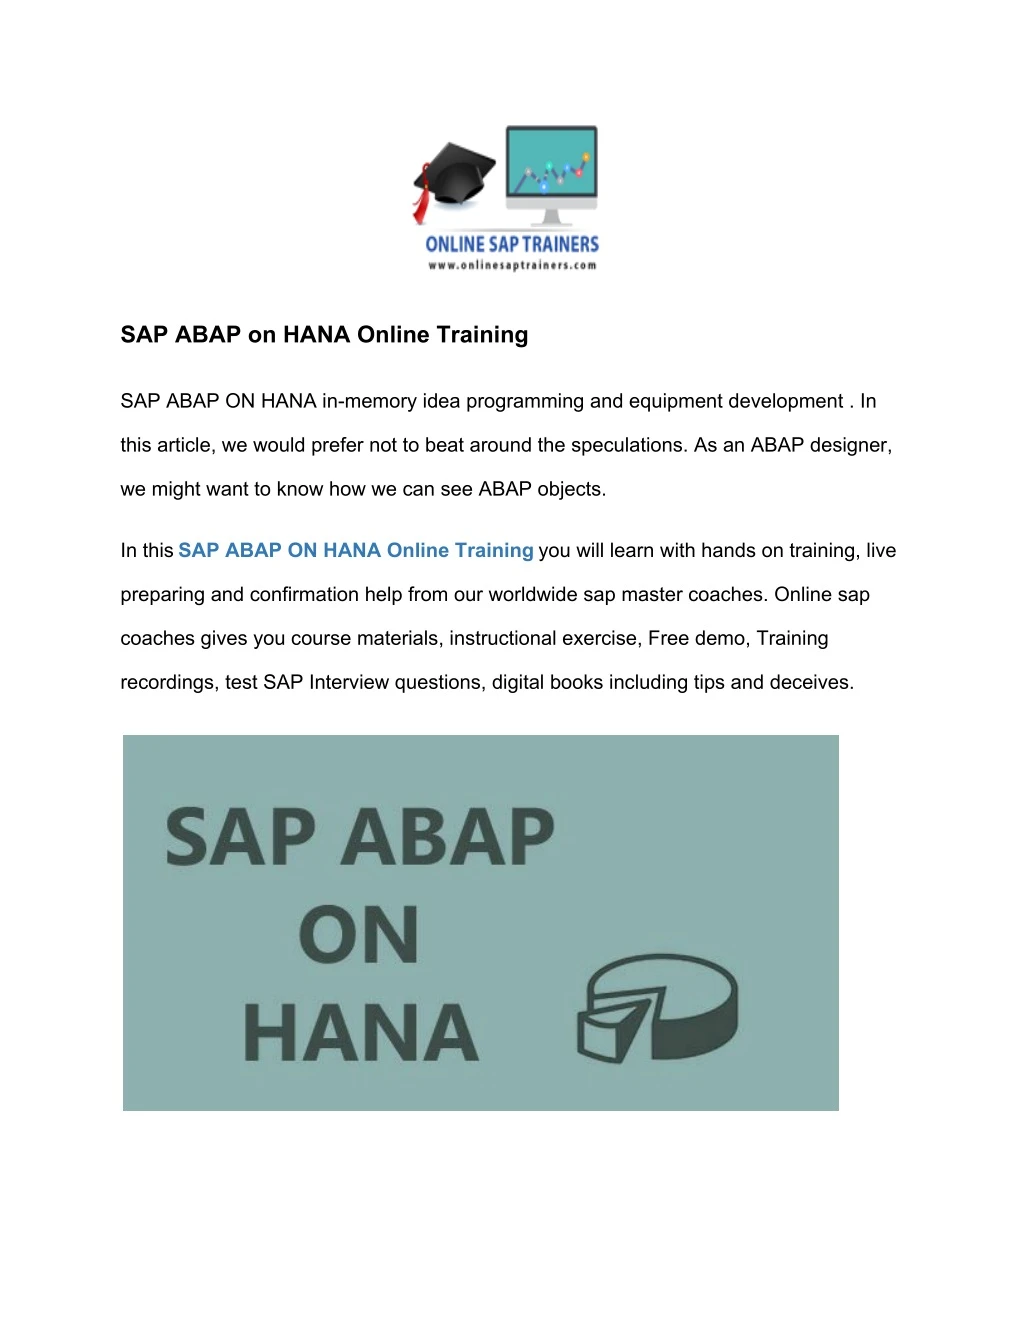 sap abap on hana online training